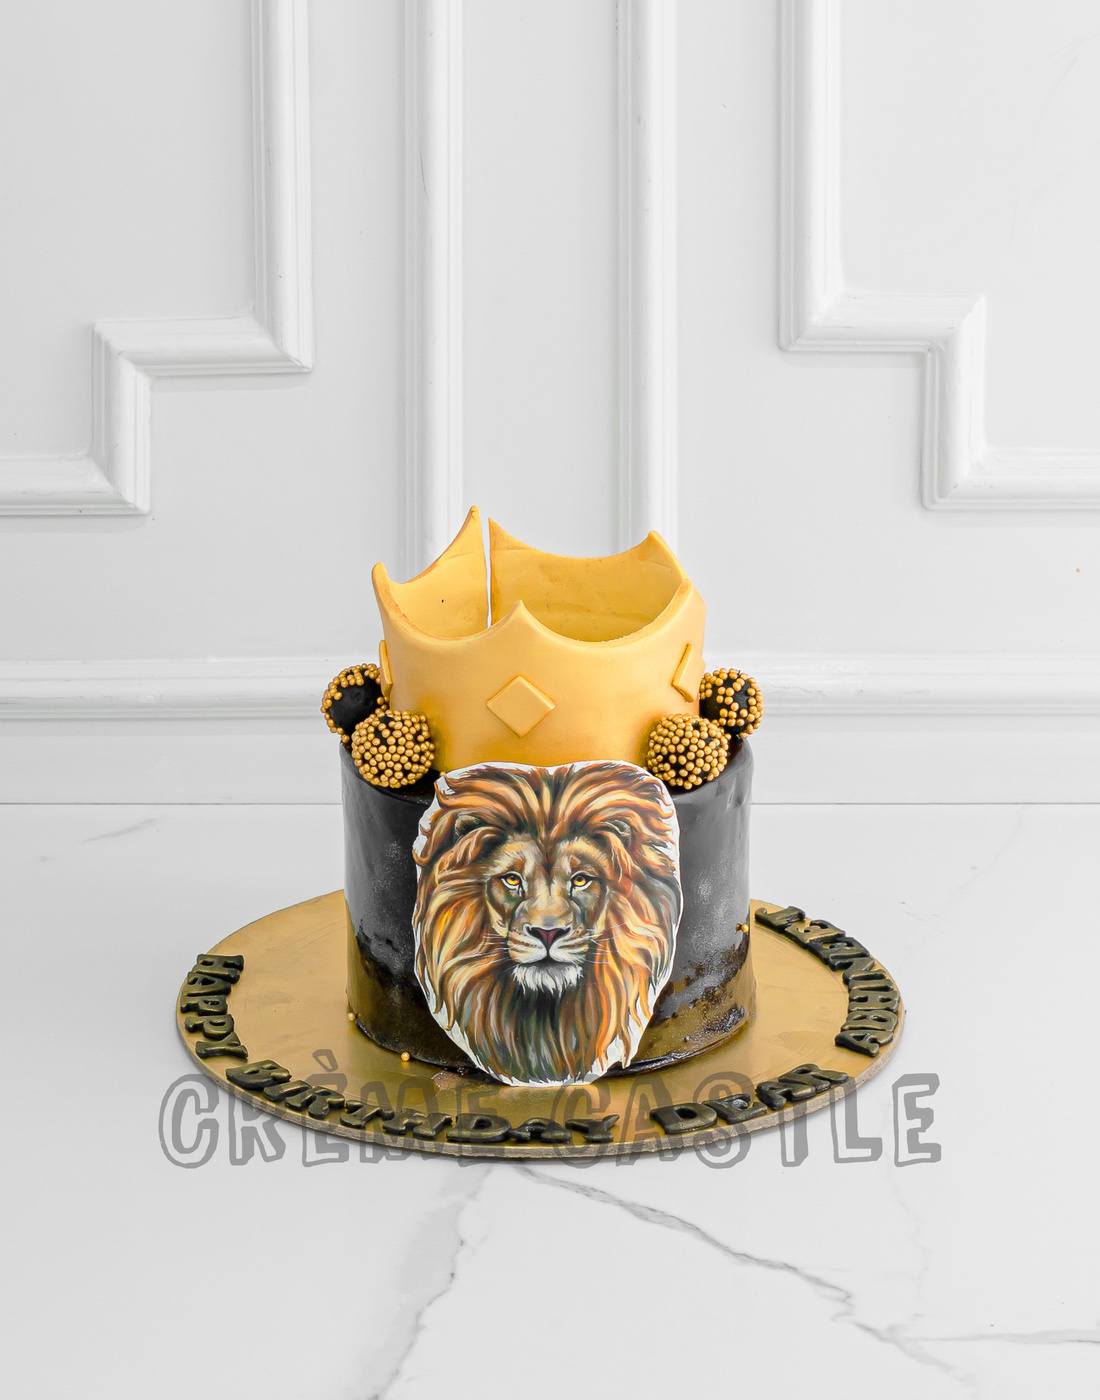 The Lion King Simba Cake - YouTube